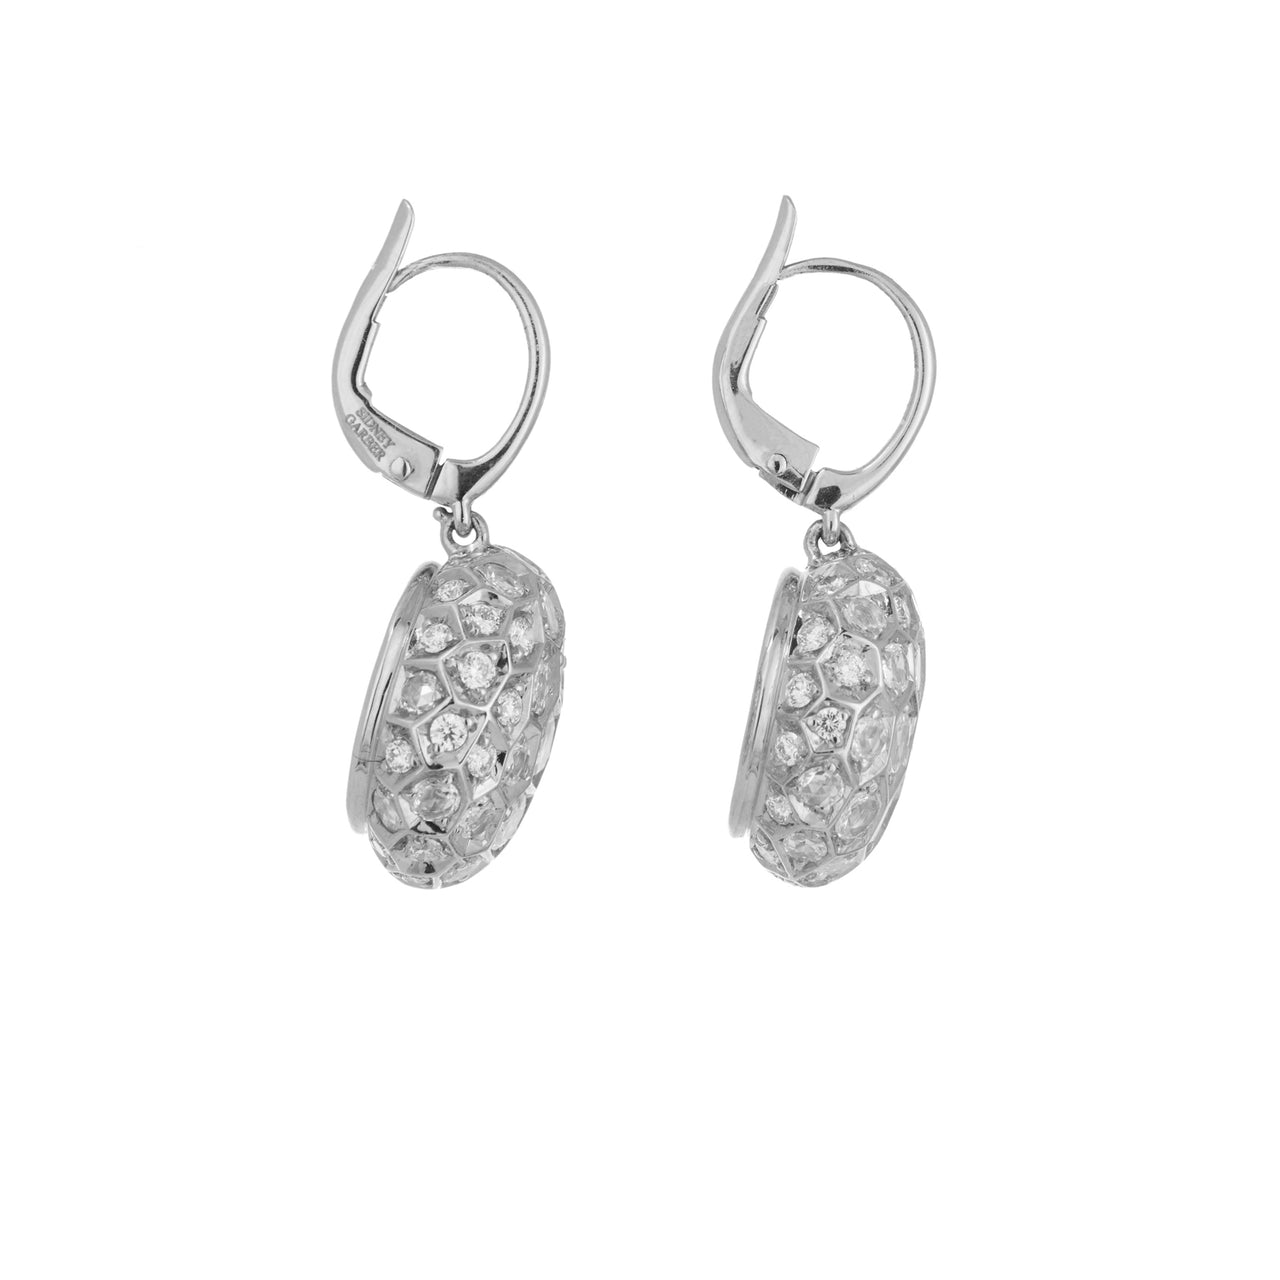 Honeycomb Earrings with Diamonds - Small